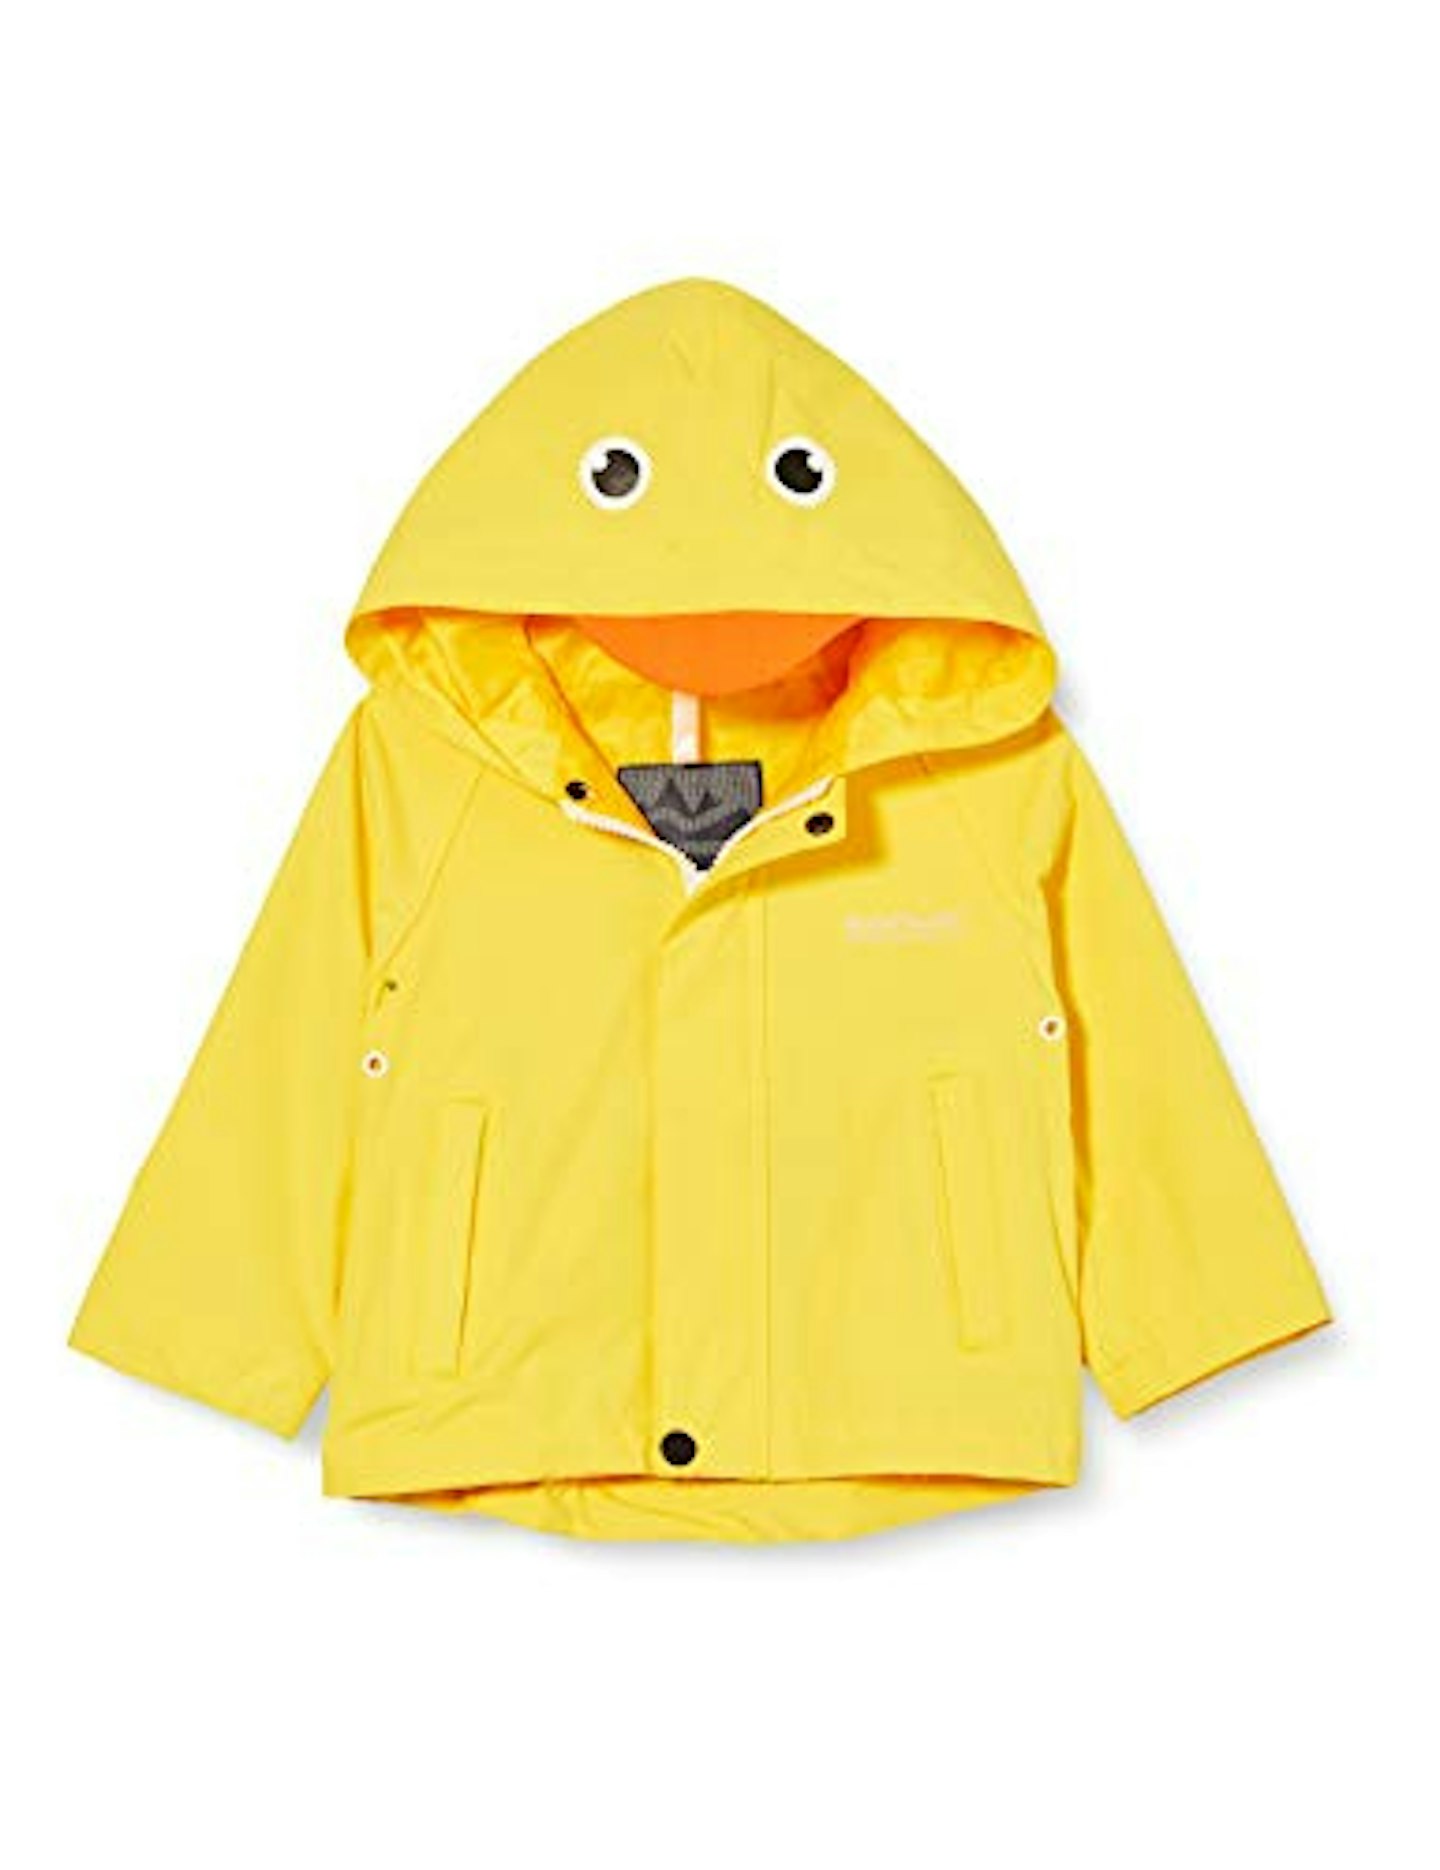 Yellow kids raincoat with a "duck" hood